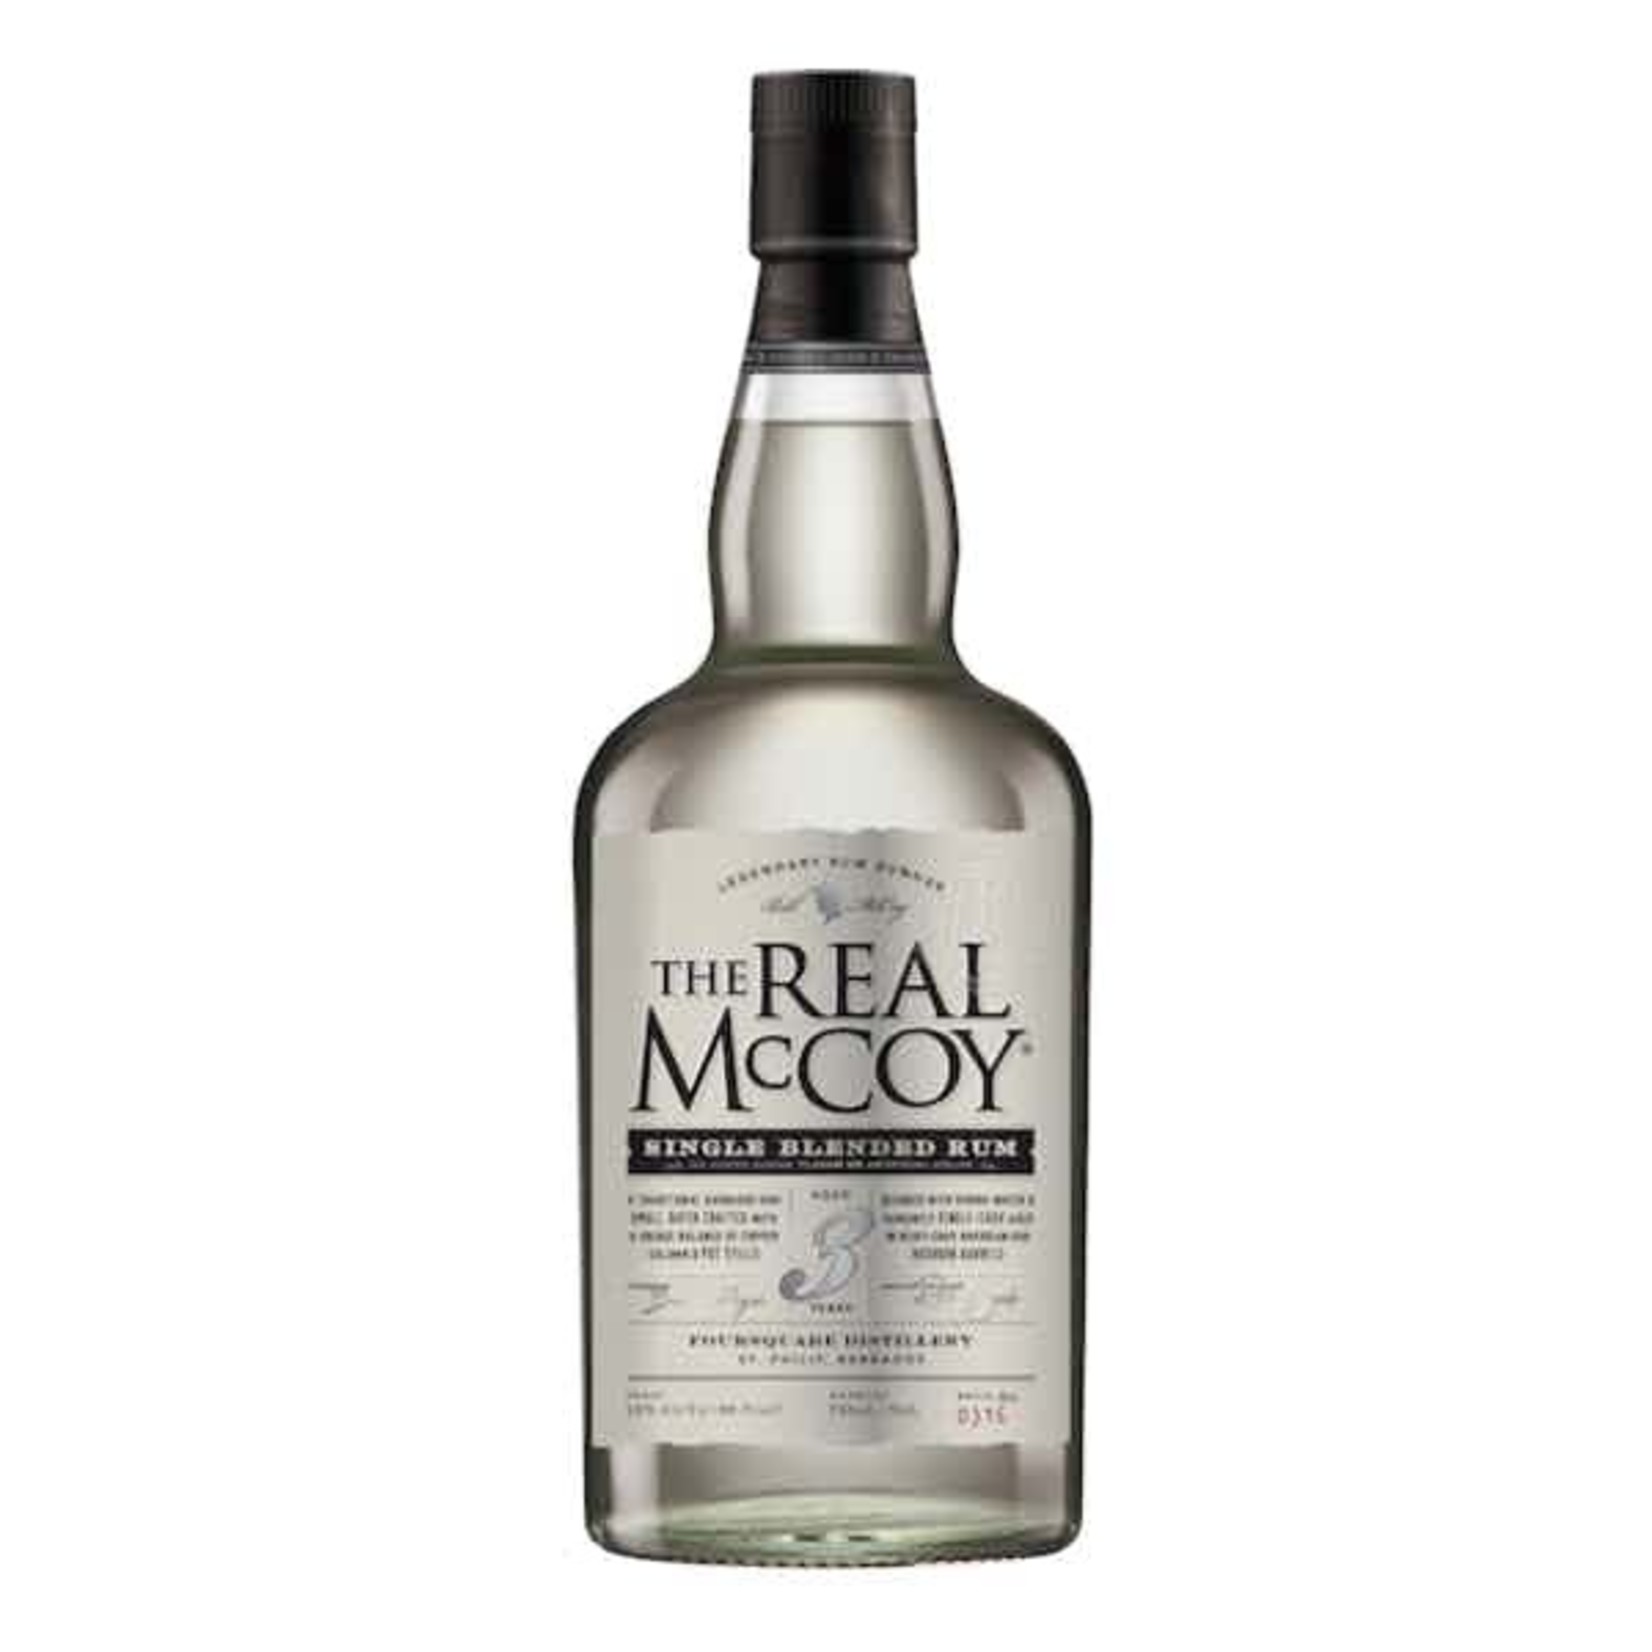 The Real McCoy Real Mccoy Rum (3yr)